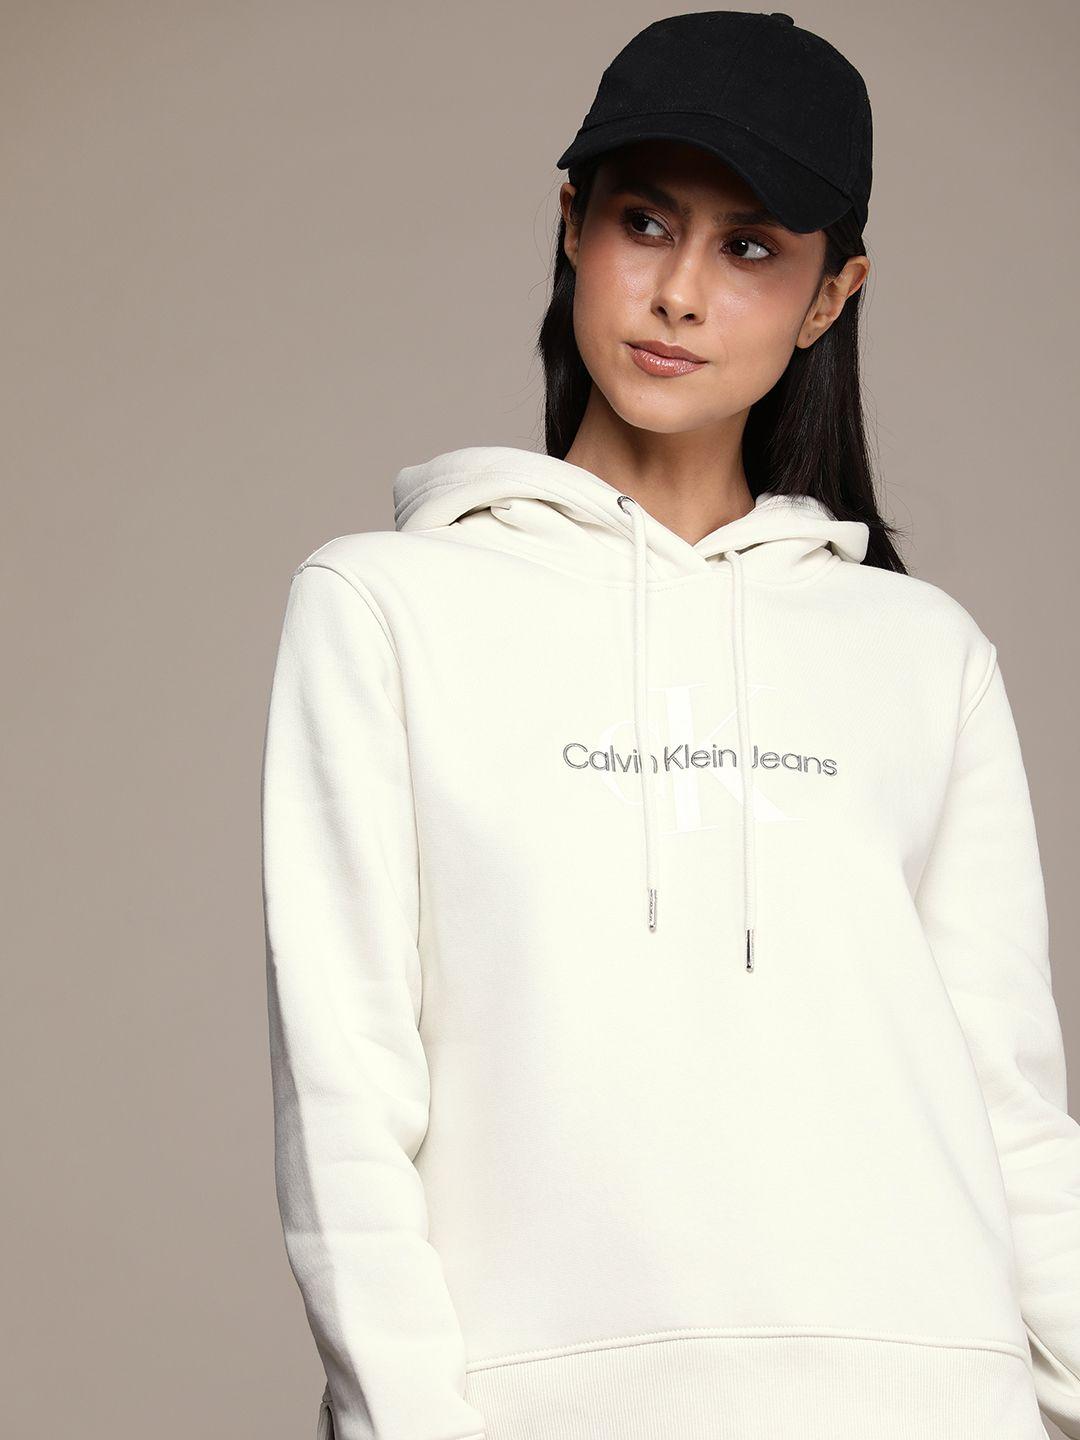 calvin klein jeans brand logo embroidered hooded sweatshirt